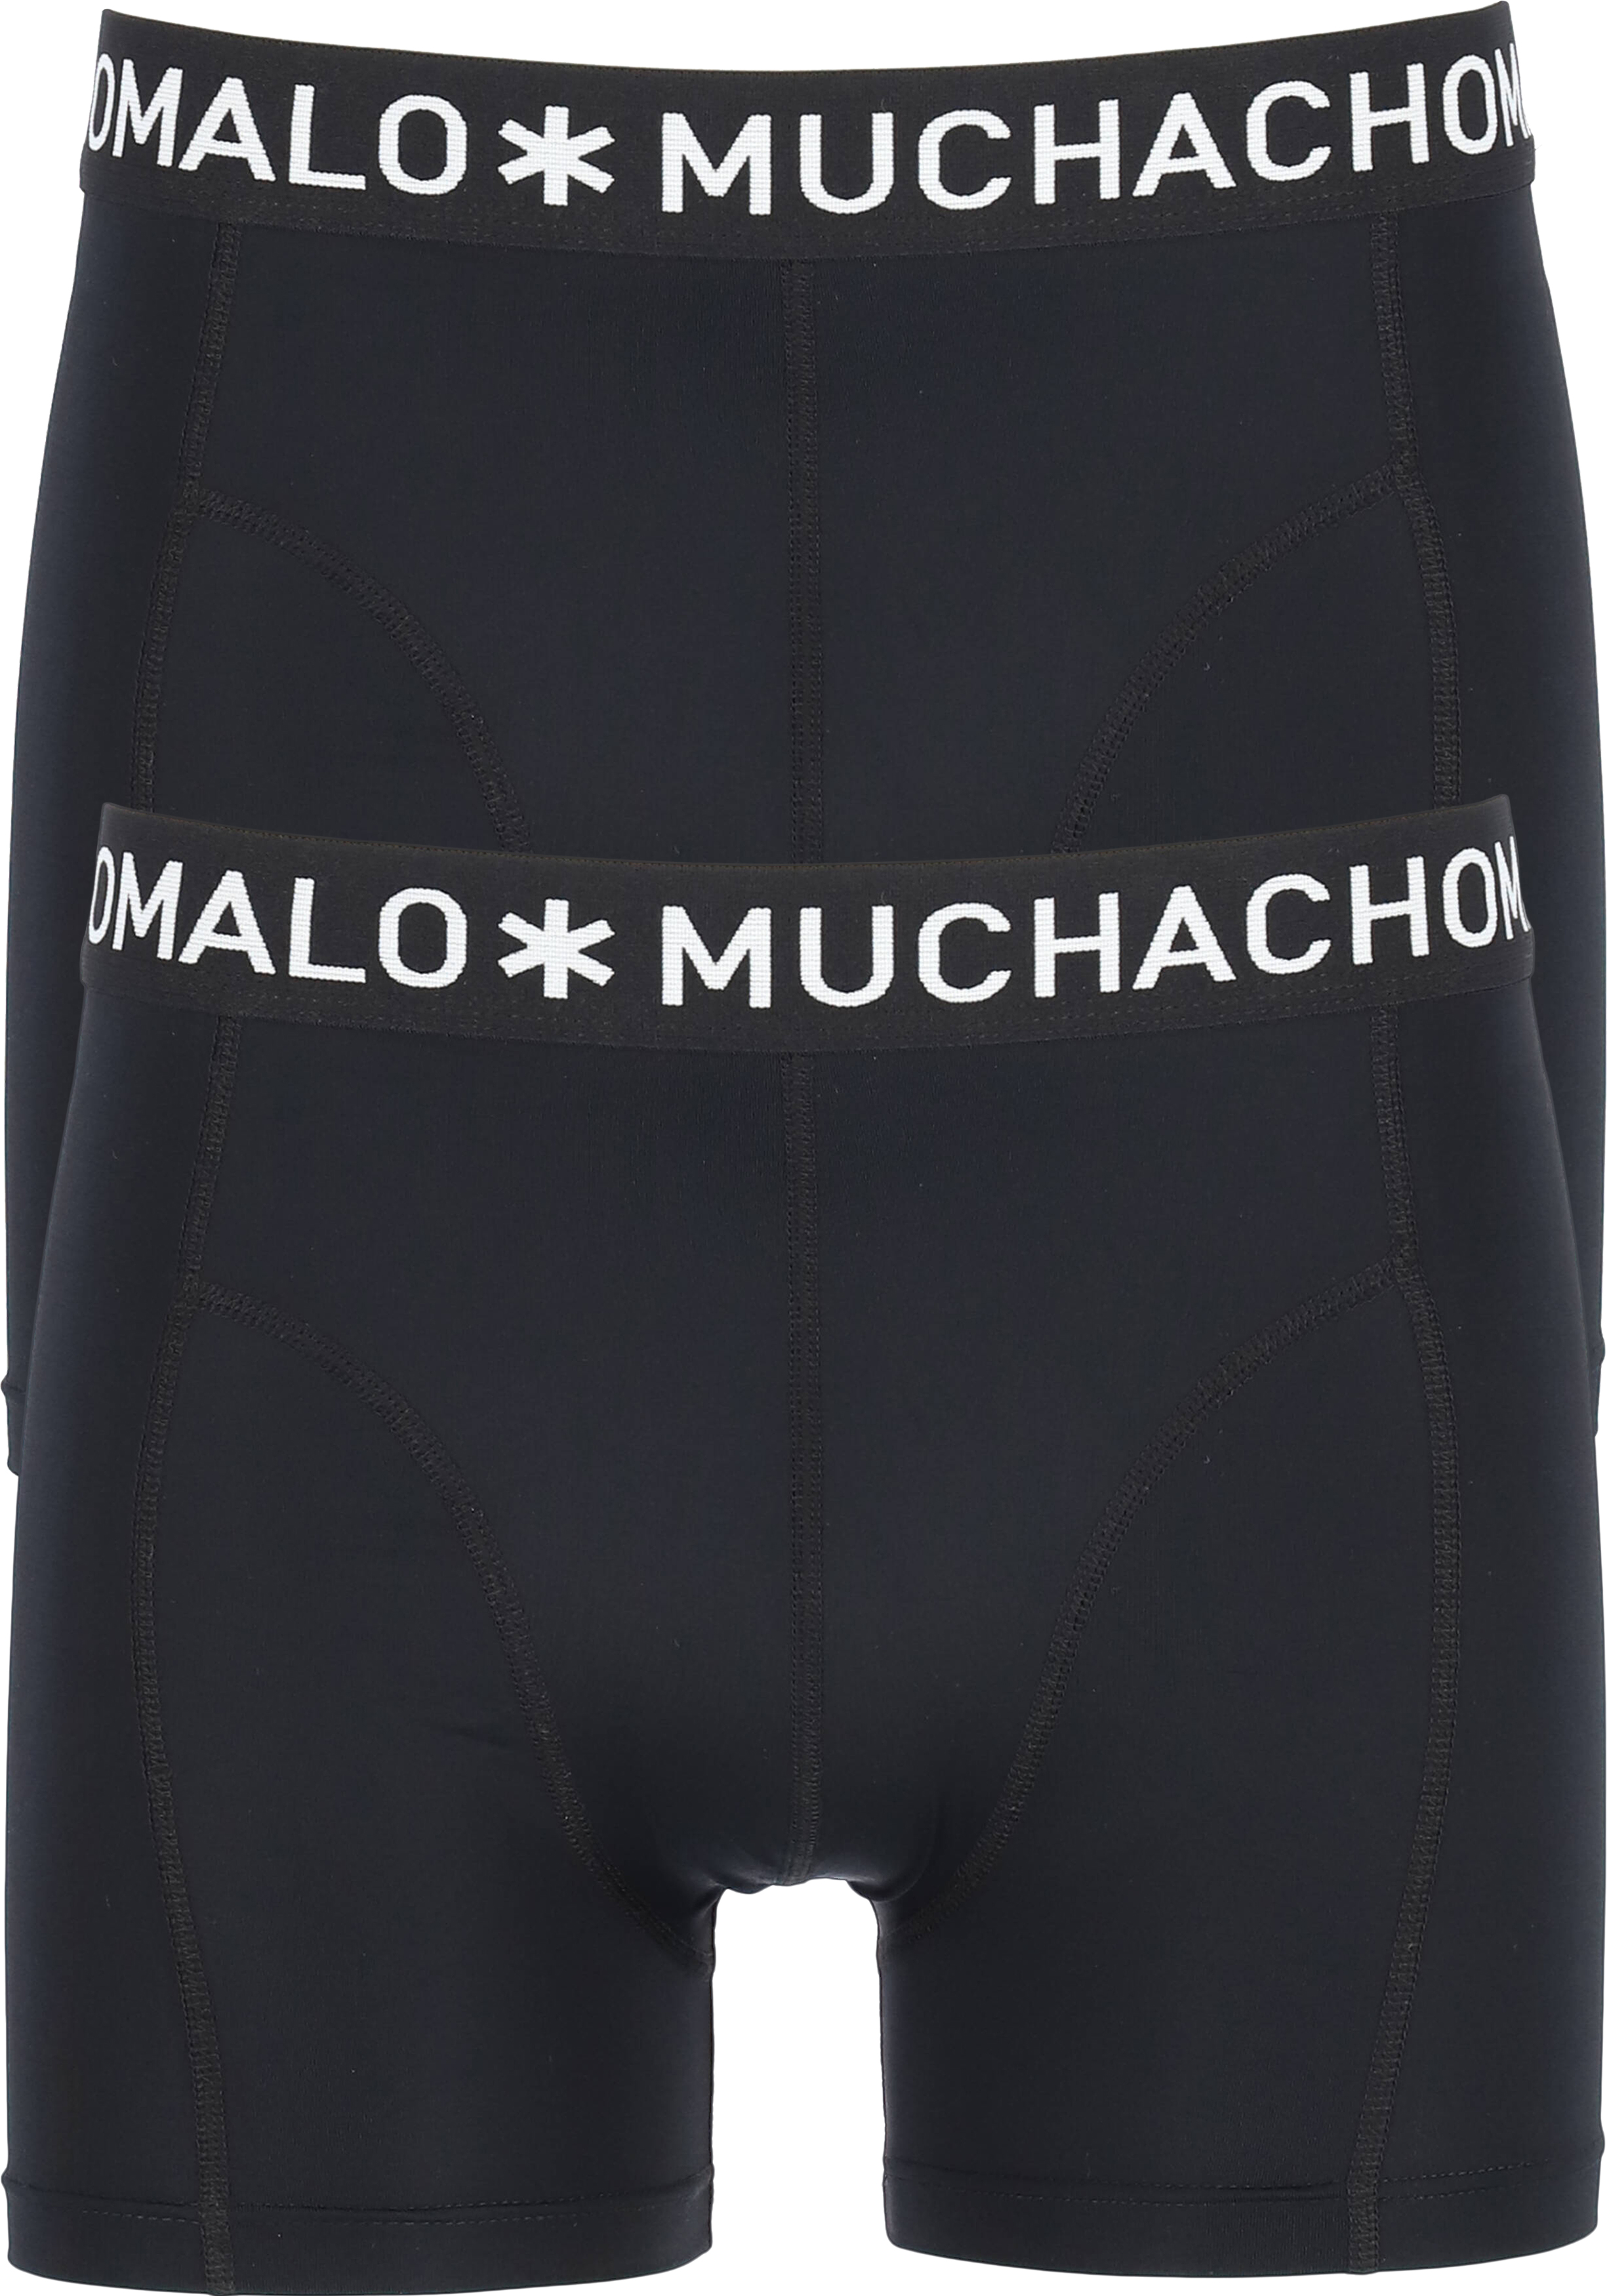 Muchchomalo microfiber boxershorts (2-pack), heren boxers normale lengte, zwart